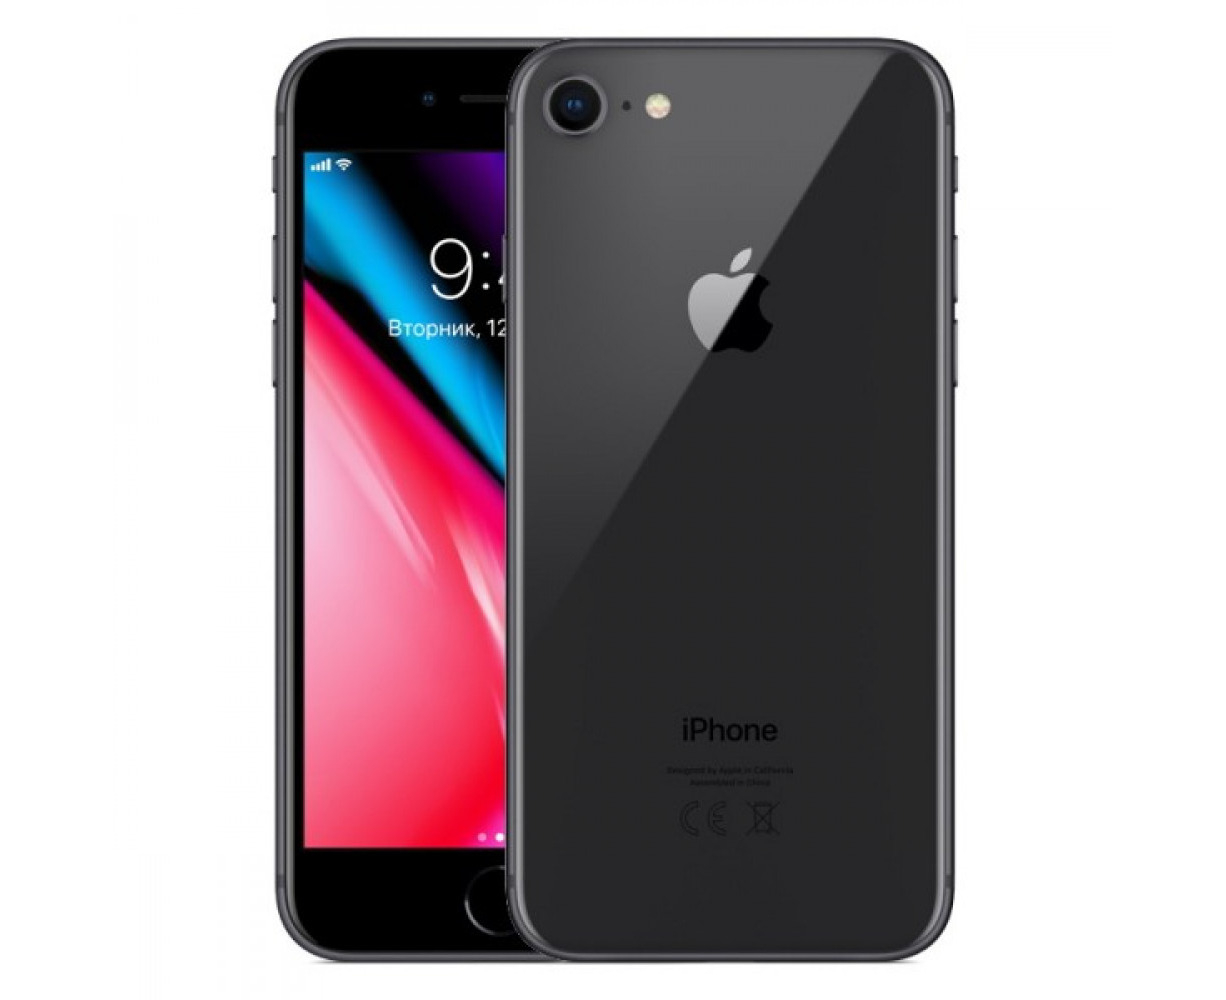 Apple iPhone 8 (64GB) - Space Grey - Refurbished Grade B | Catch.com.au